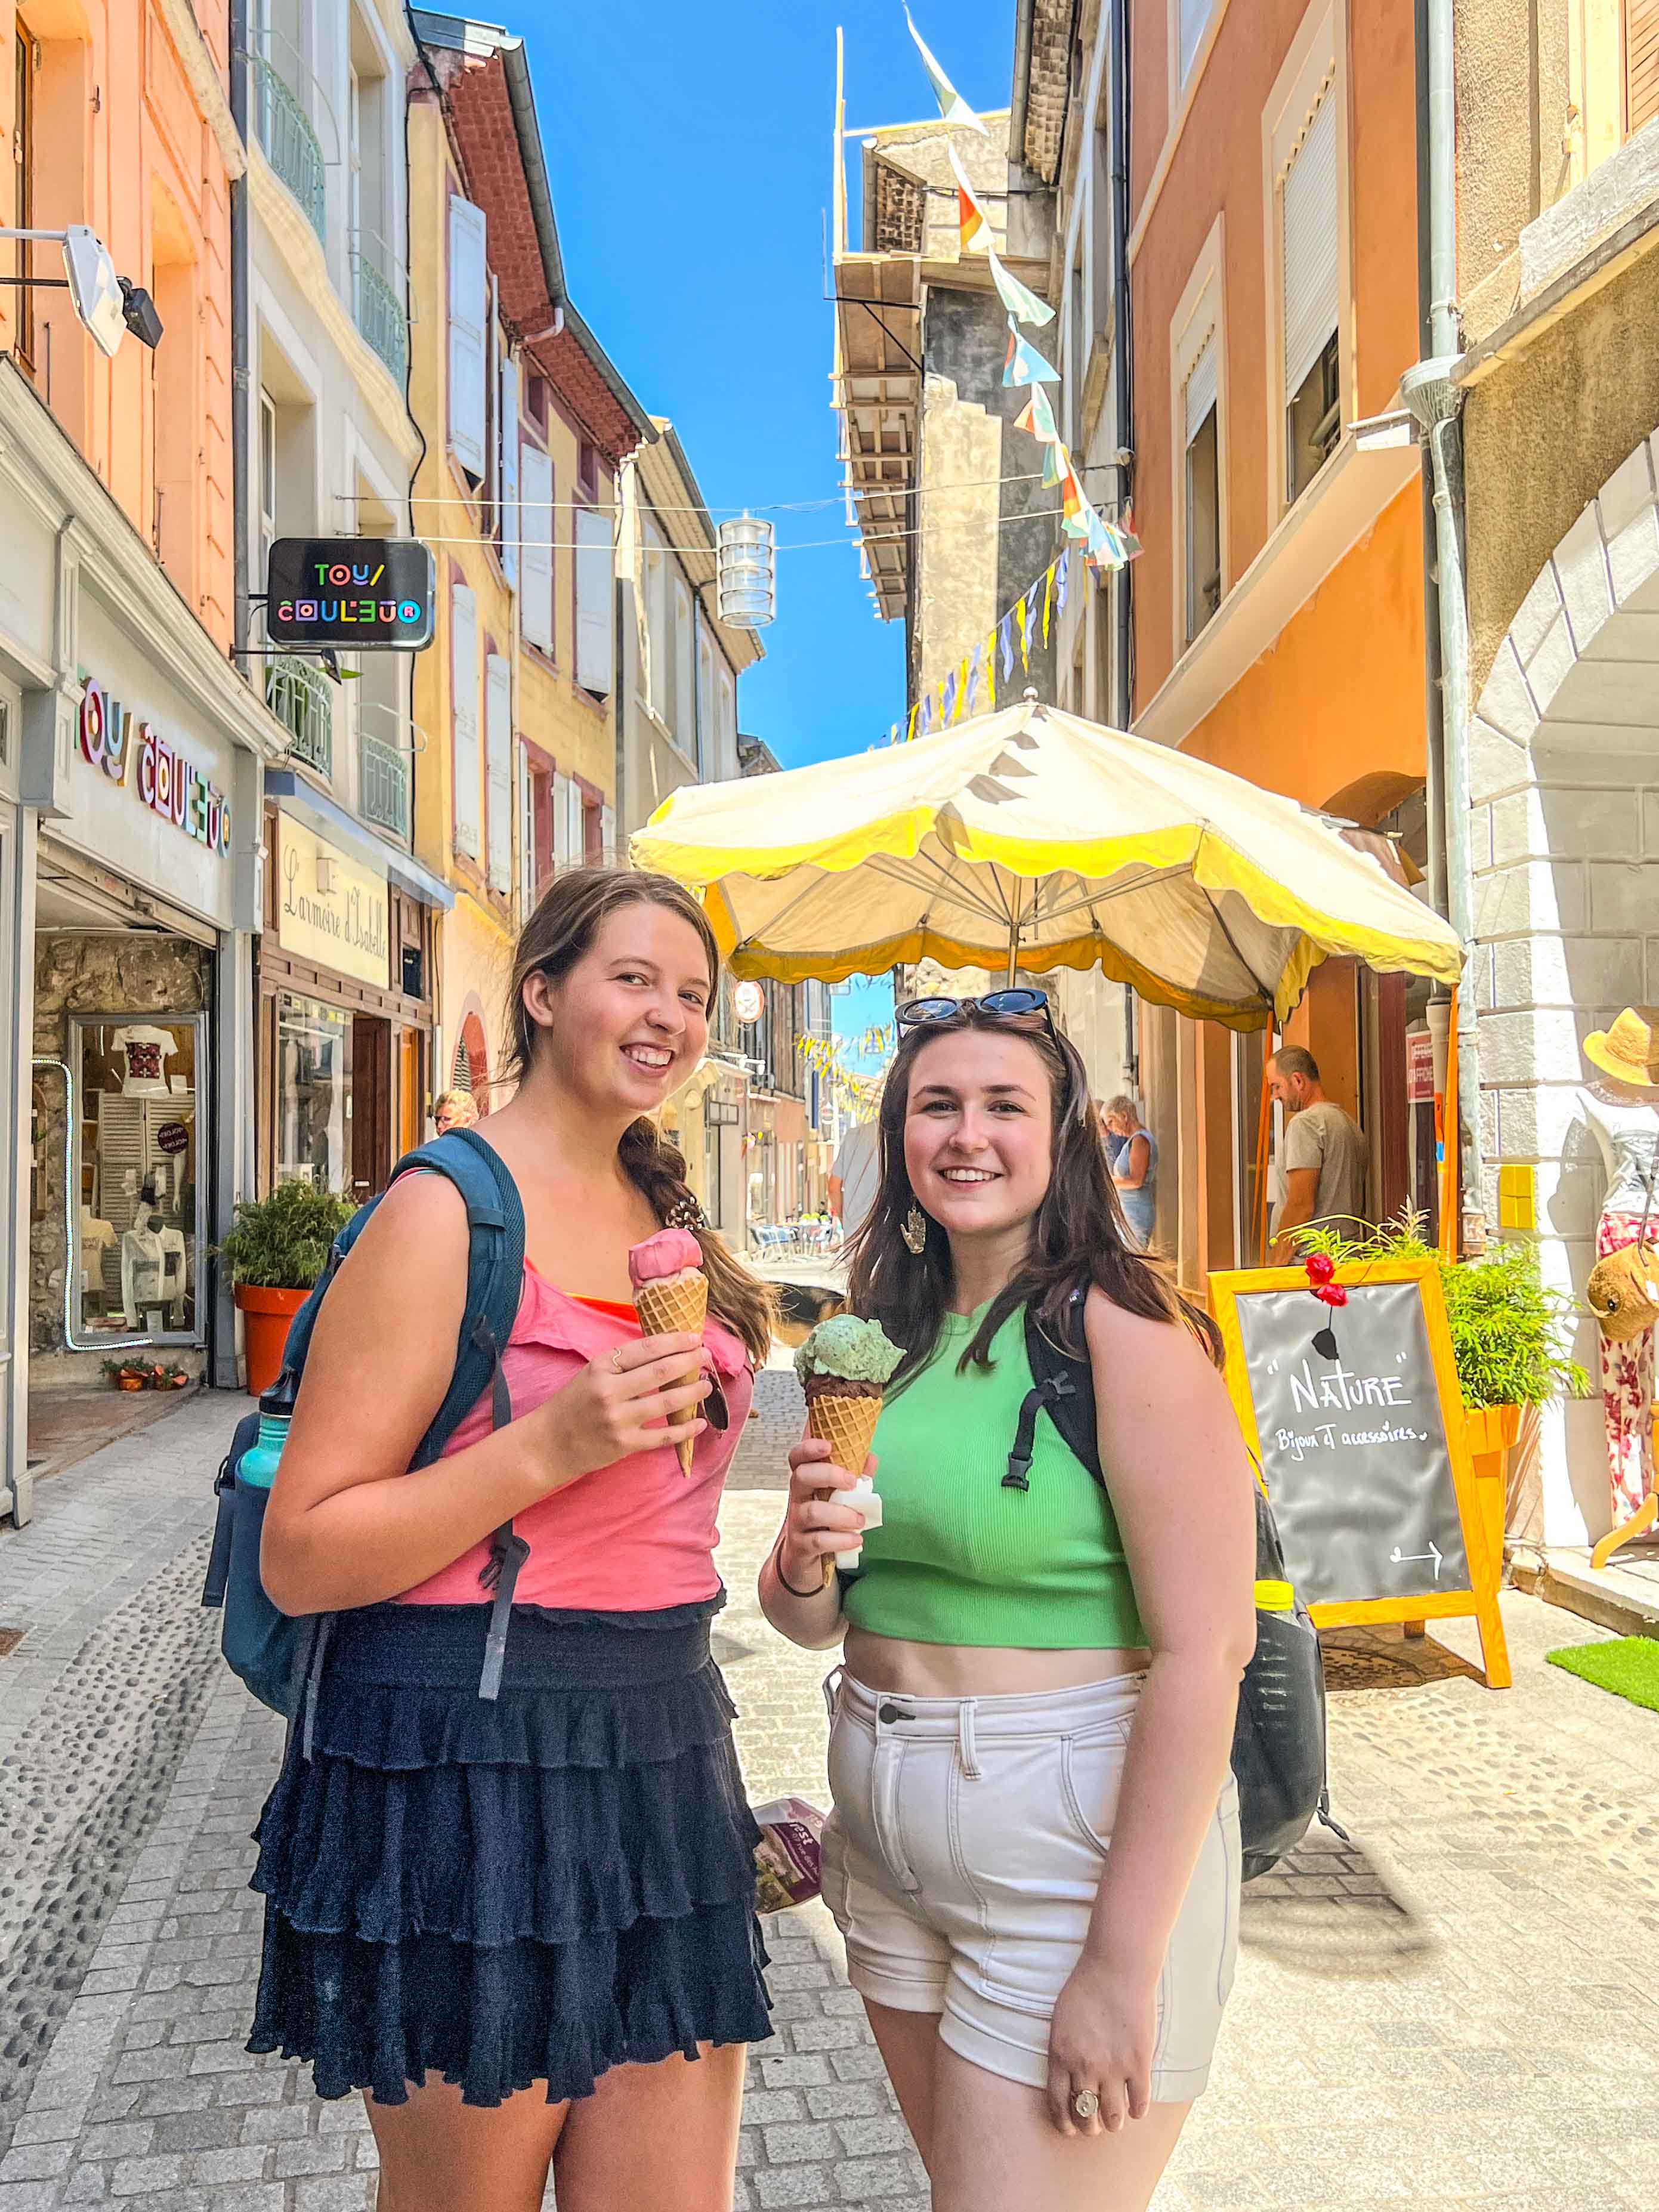 Students enjoying gelato in Crest, France.